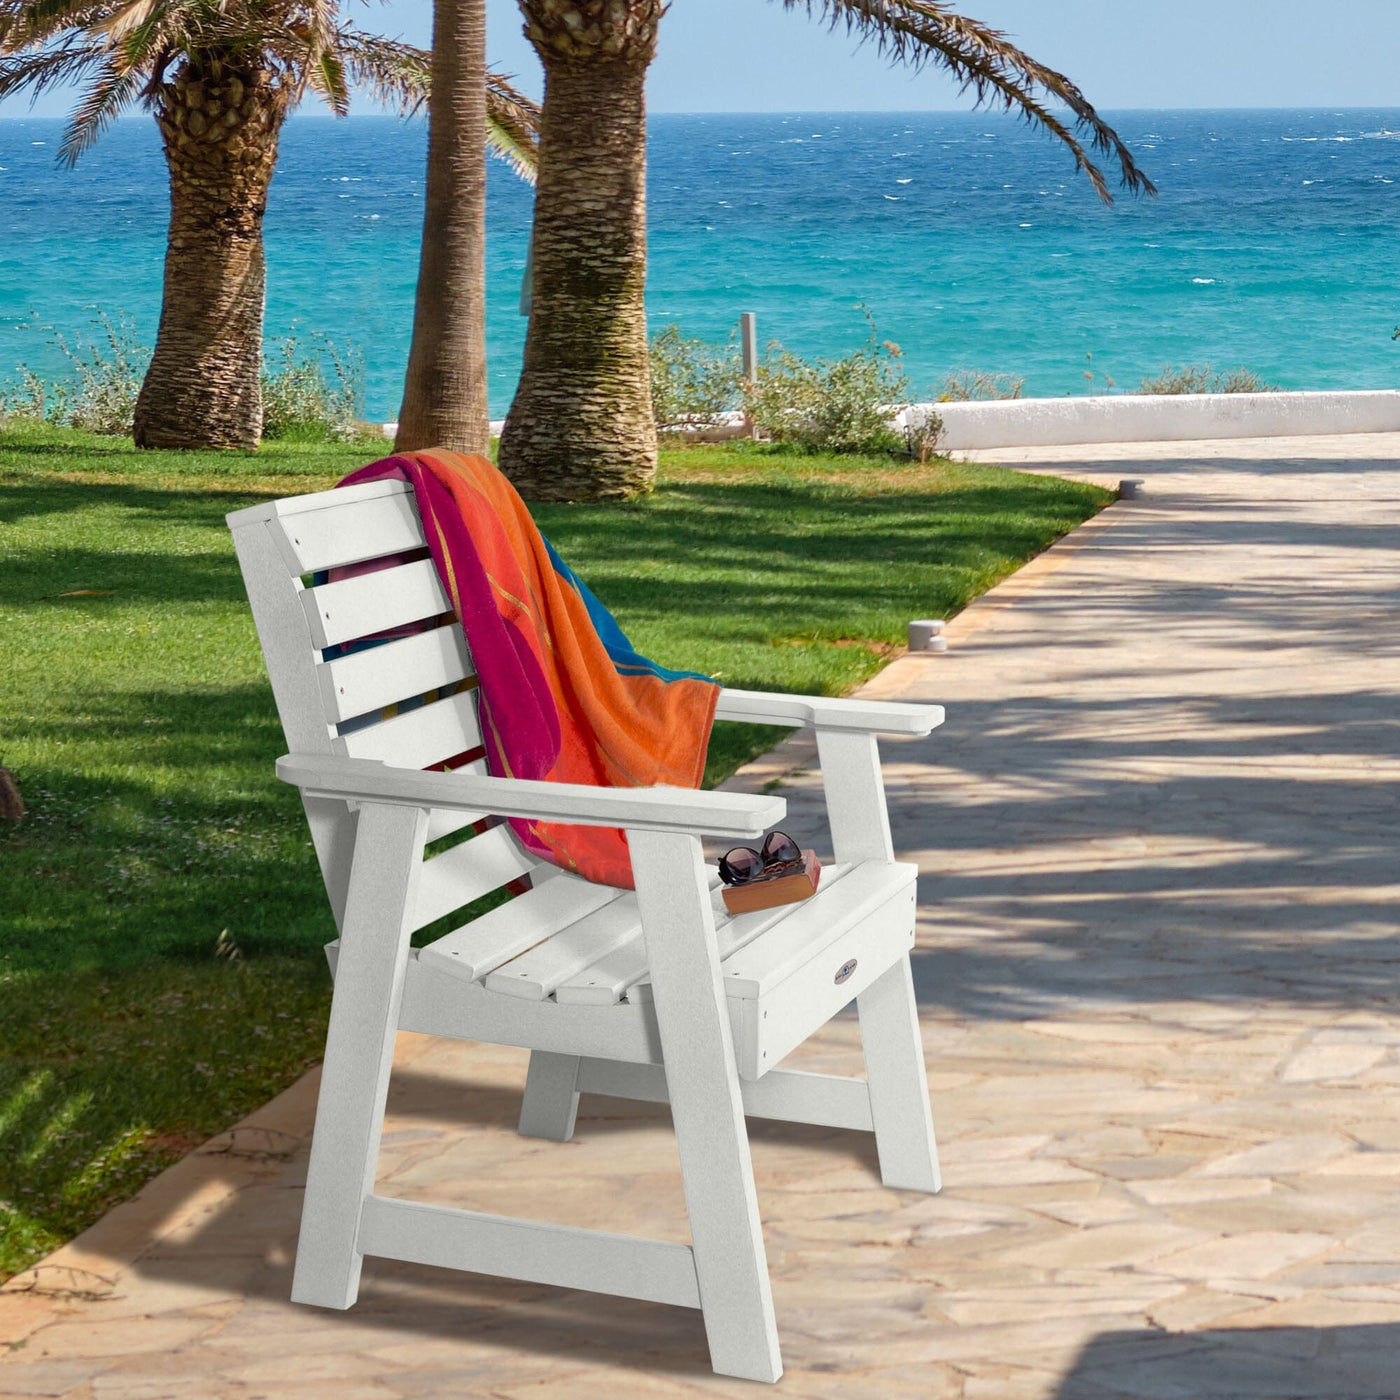 Riverside Garden Chair Chair Bahia Verde Outdoors 